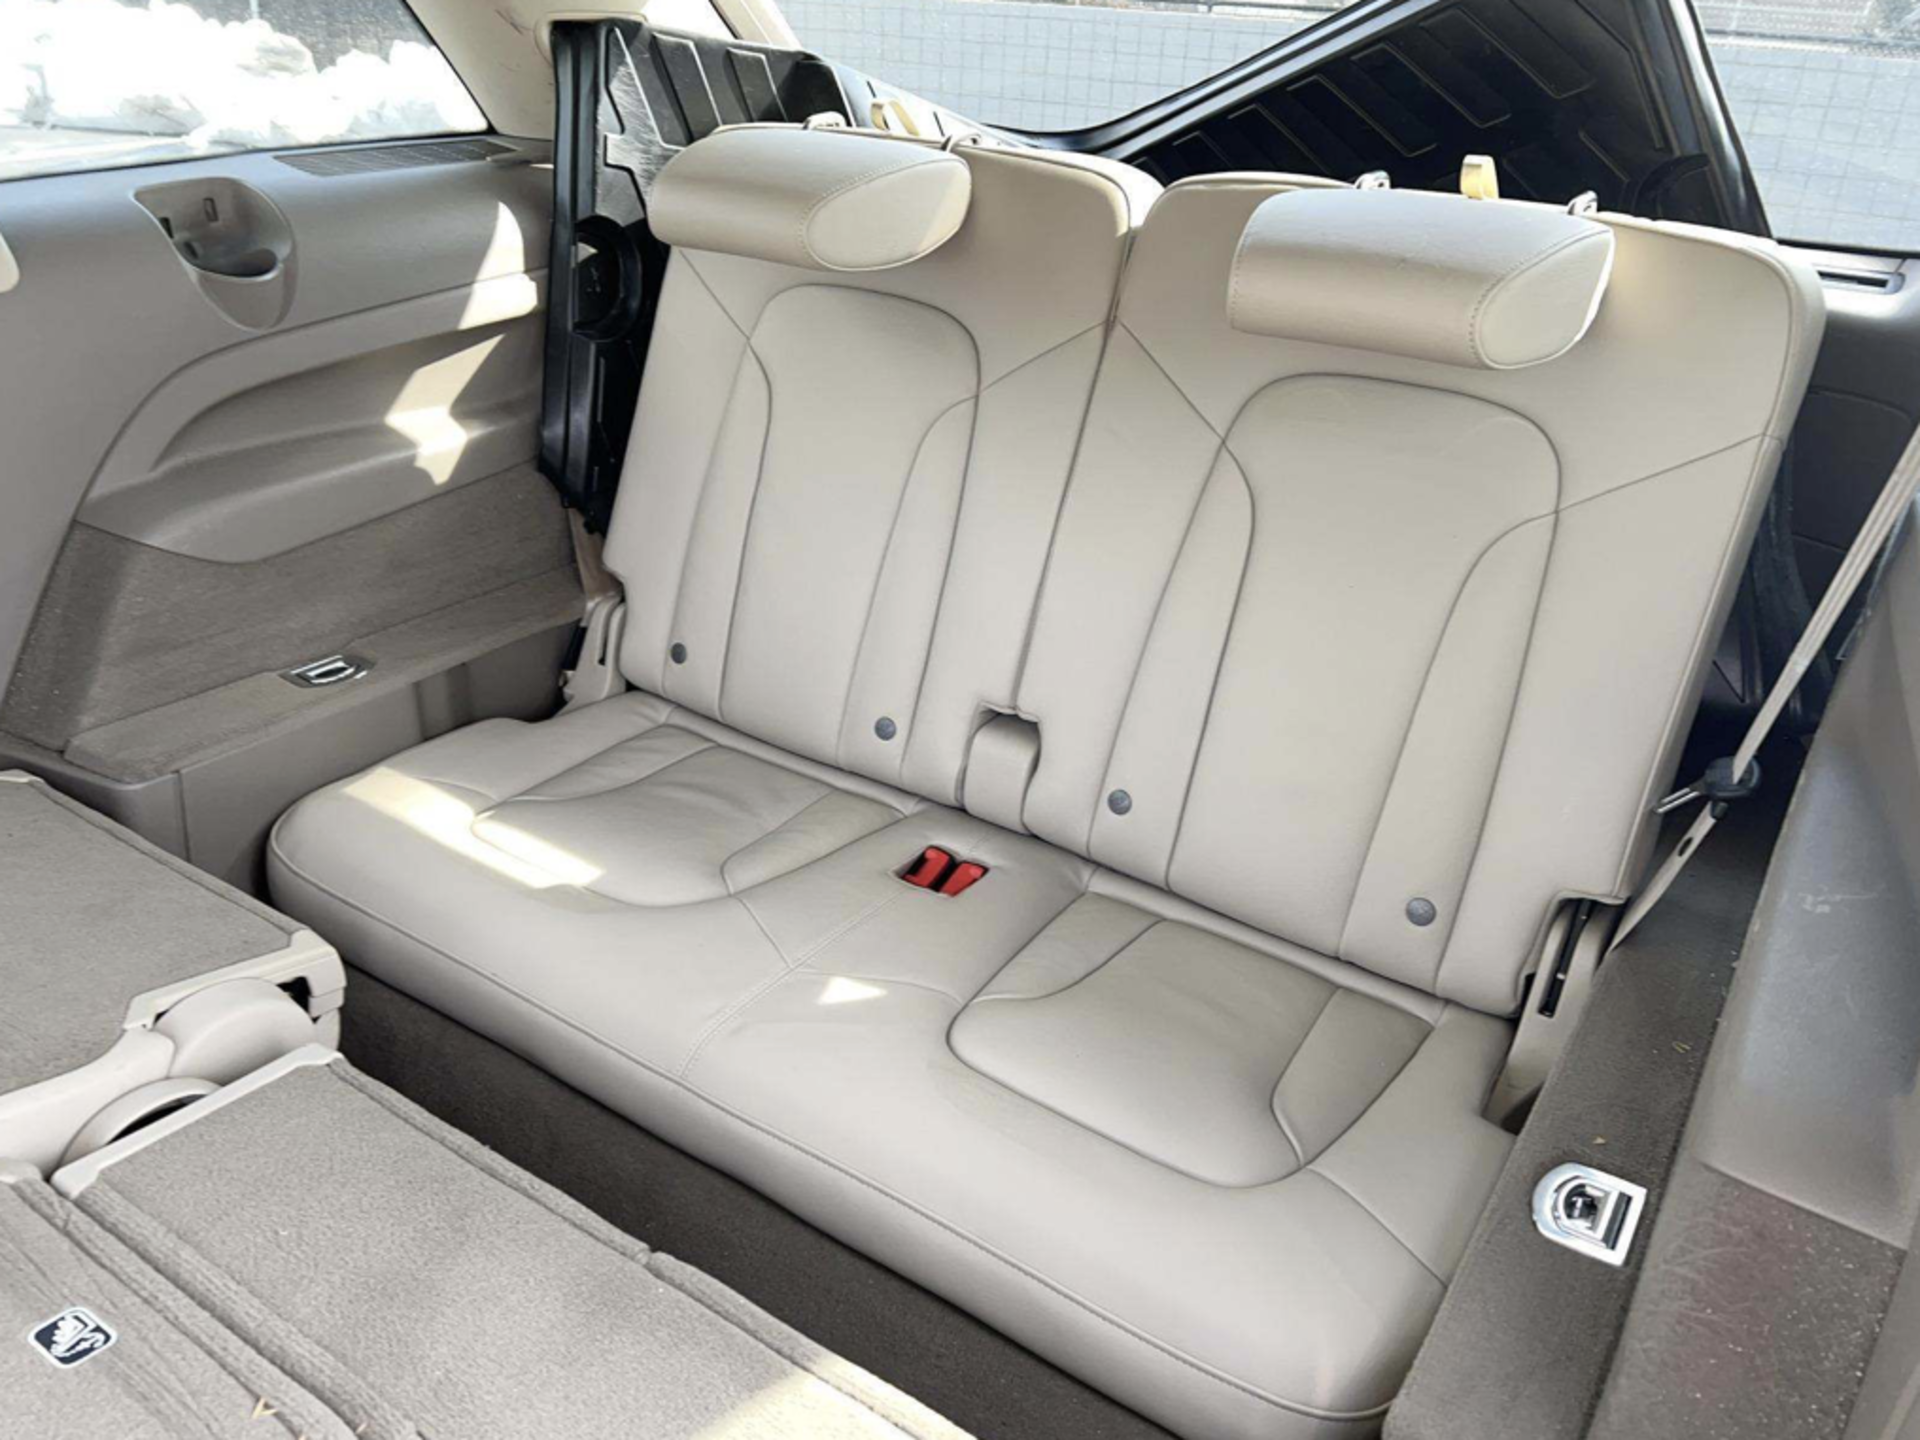 ** ON SALE ** Audi Q7 S-Line Prestige 3.0L T V6 ' 2015 Year' 7 Seater - AWD - ULEZ Compliant - LHD - Image 10 of 13